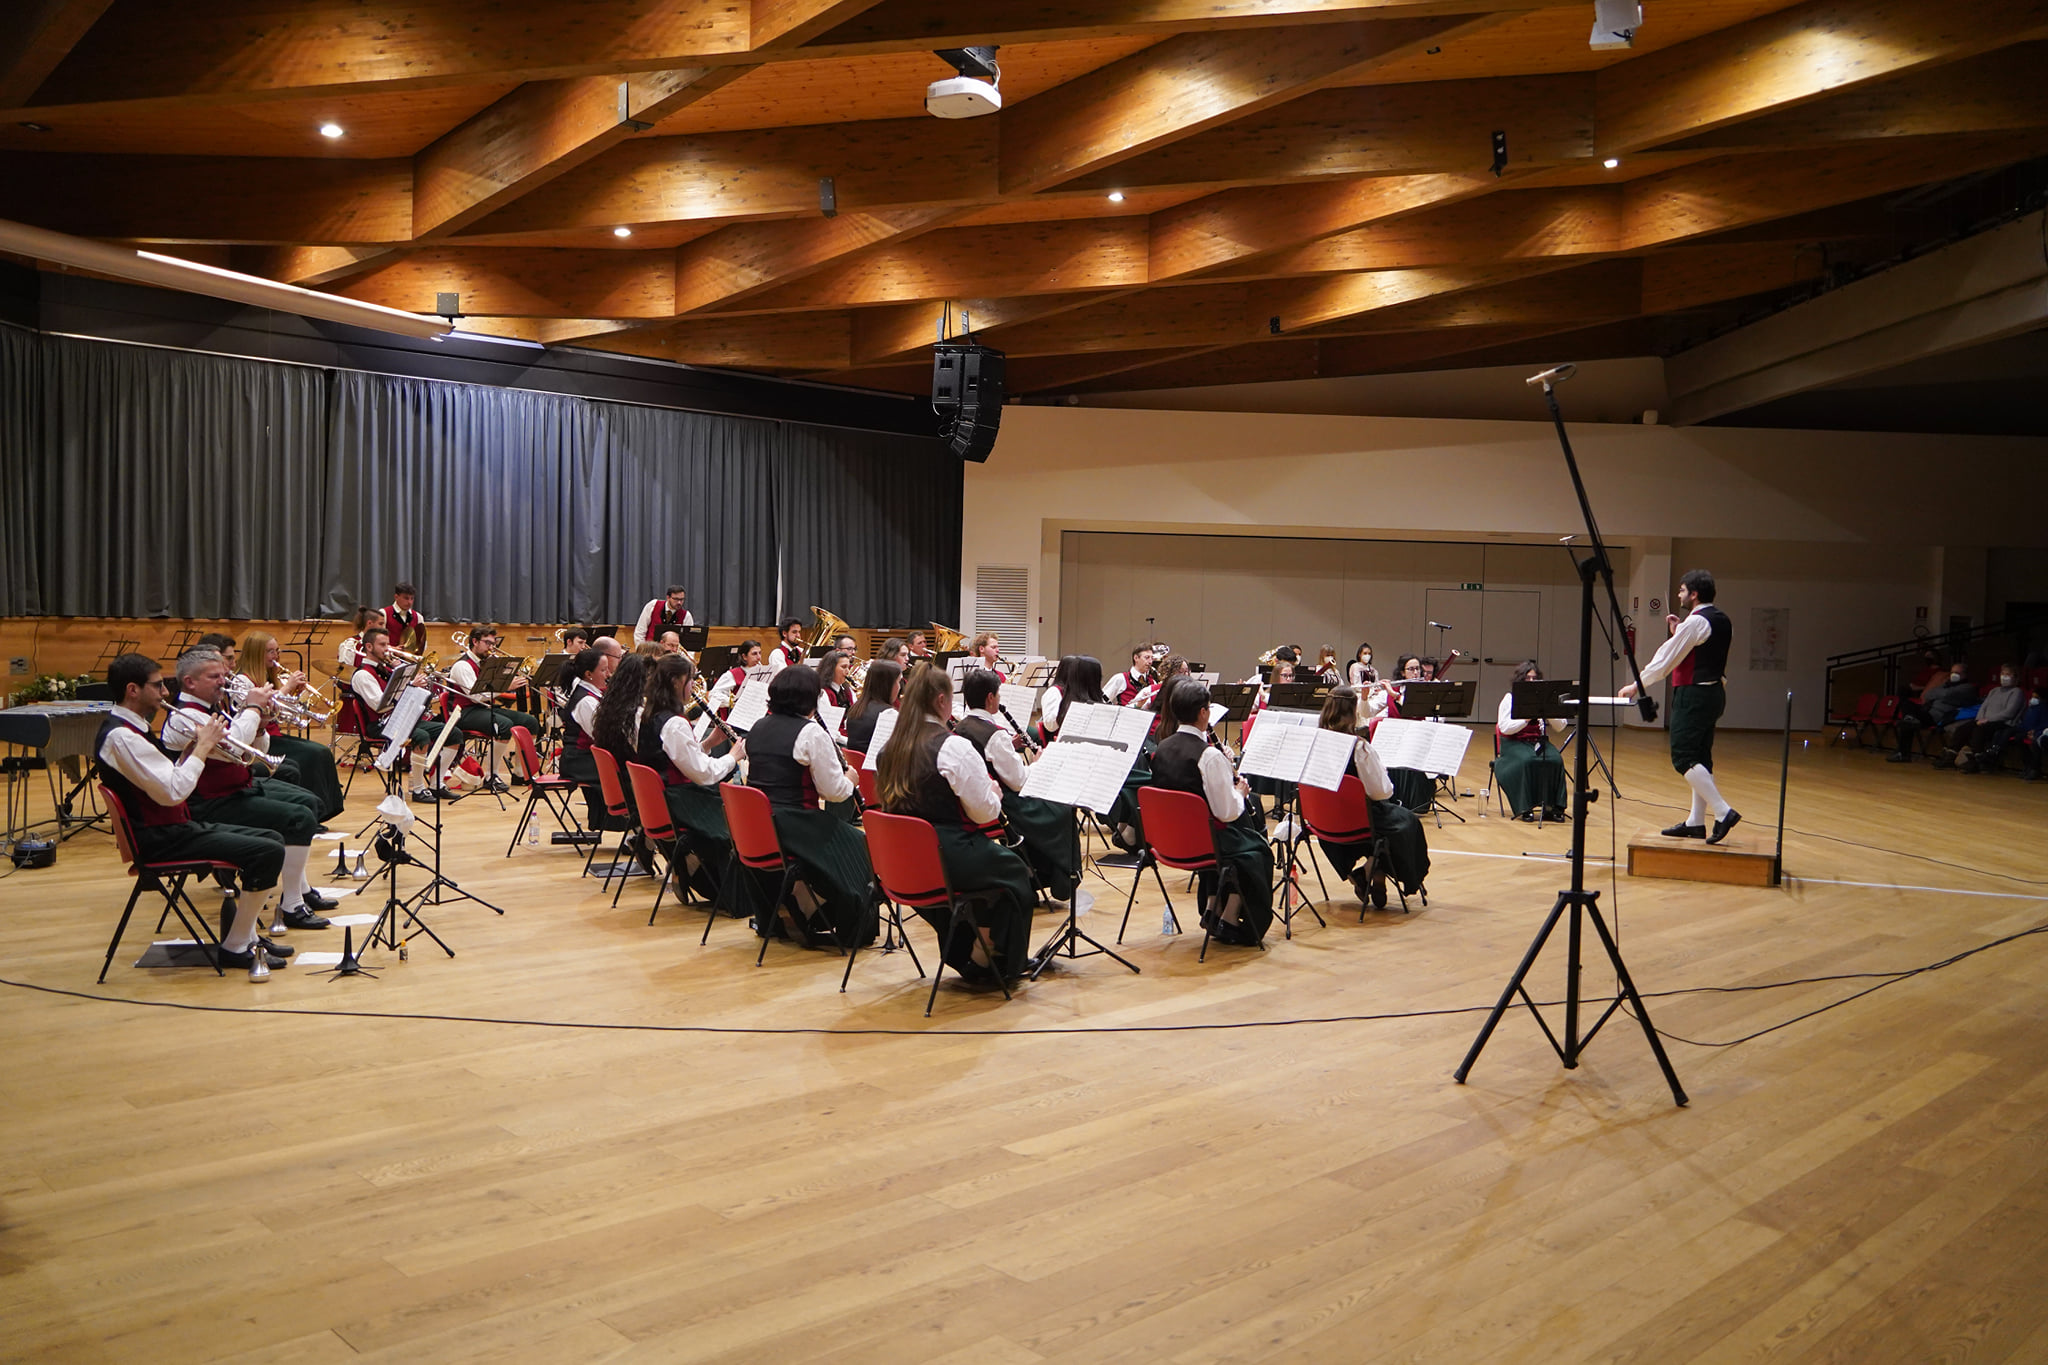 Banda Sociale di Cavalese Val di Fiemme Trentino - 200 anni di attività - Associazione musicale